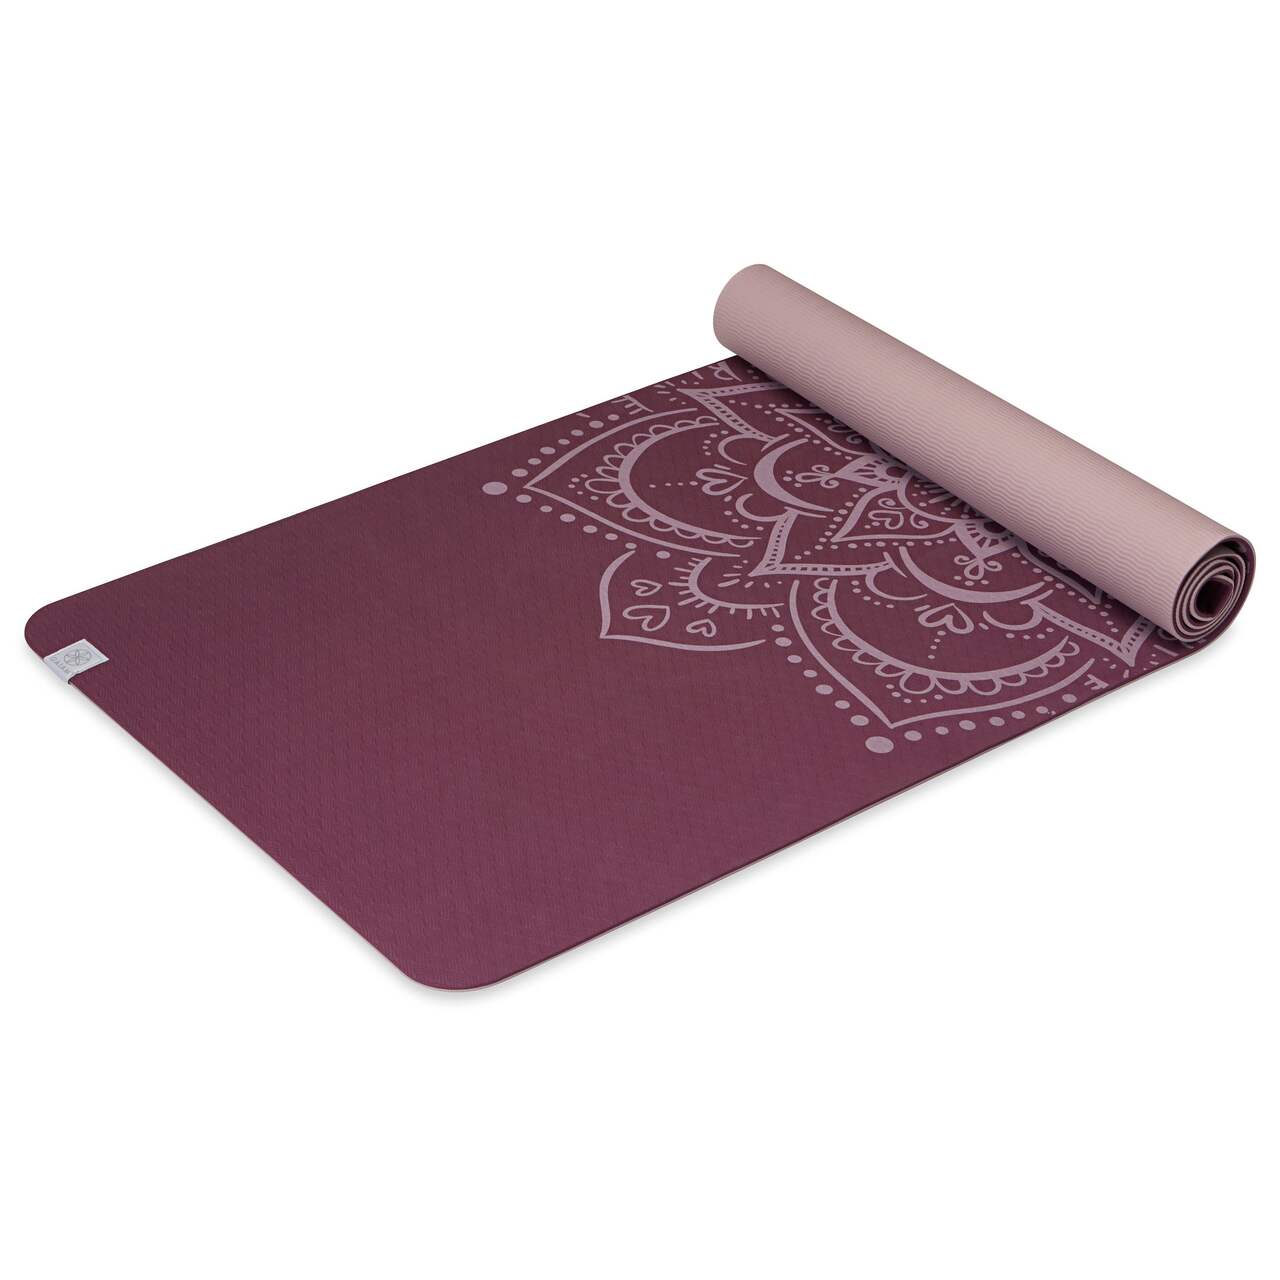 Gaiam Yoga Mat - 5mm Thick Yoga Mat - Non-Slip Exercise Mat for